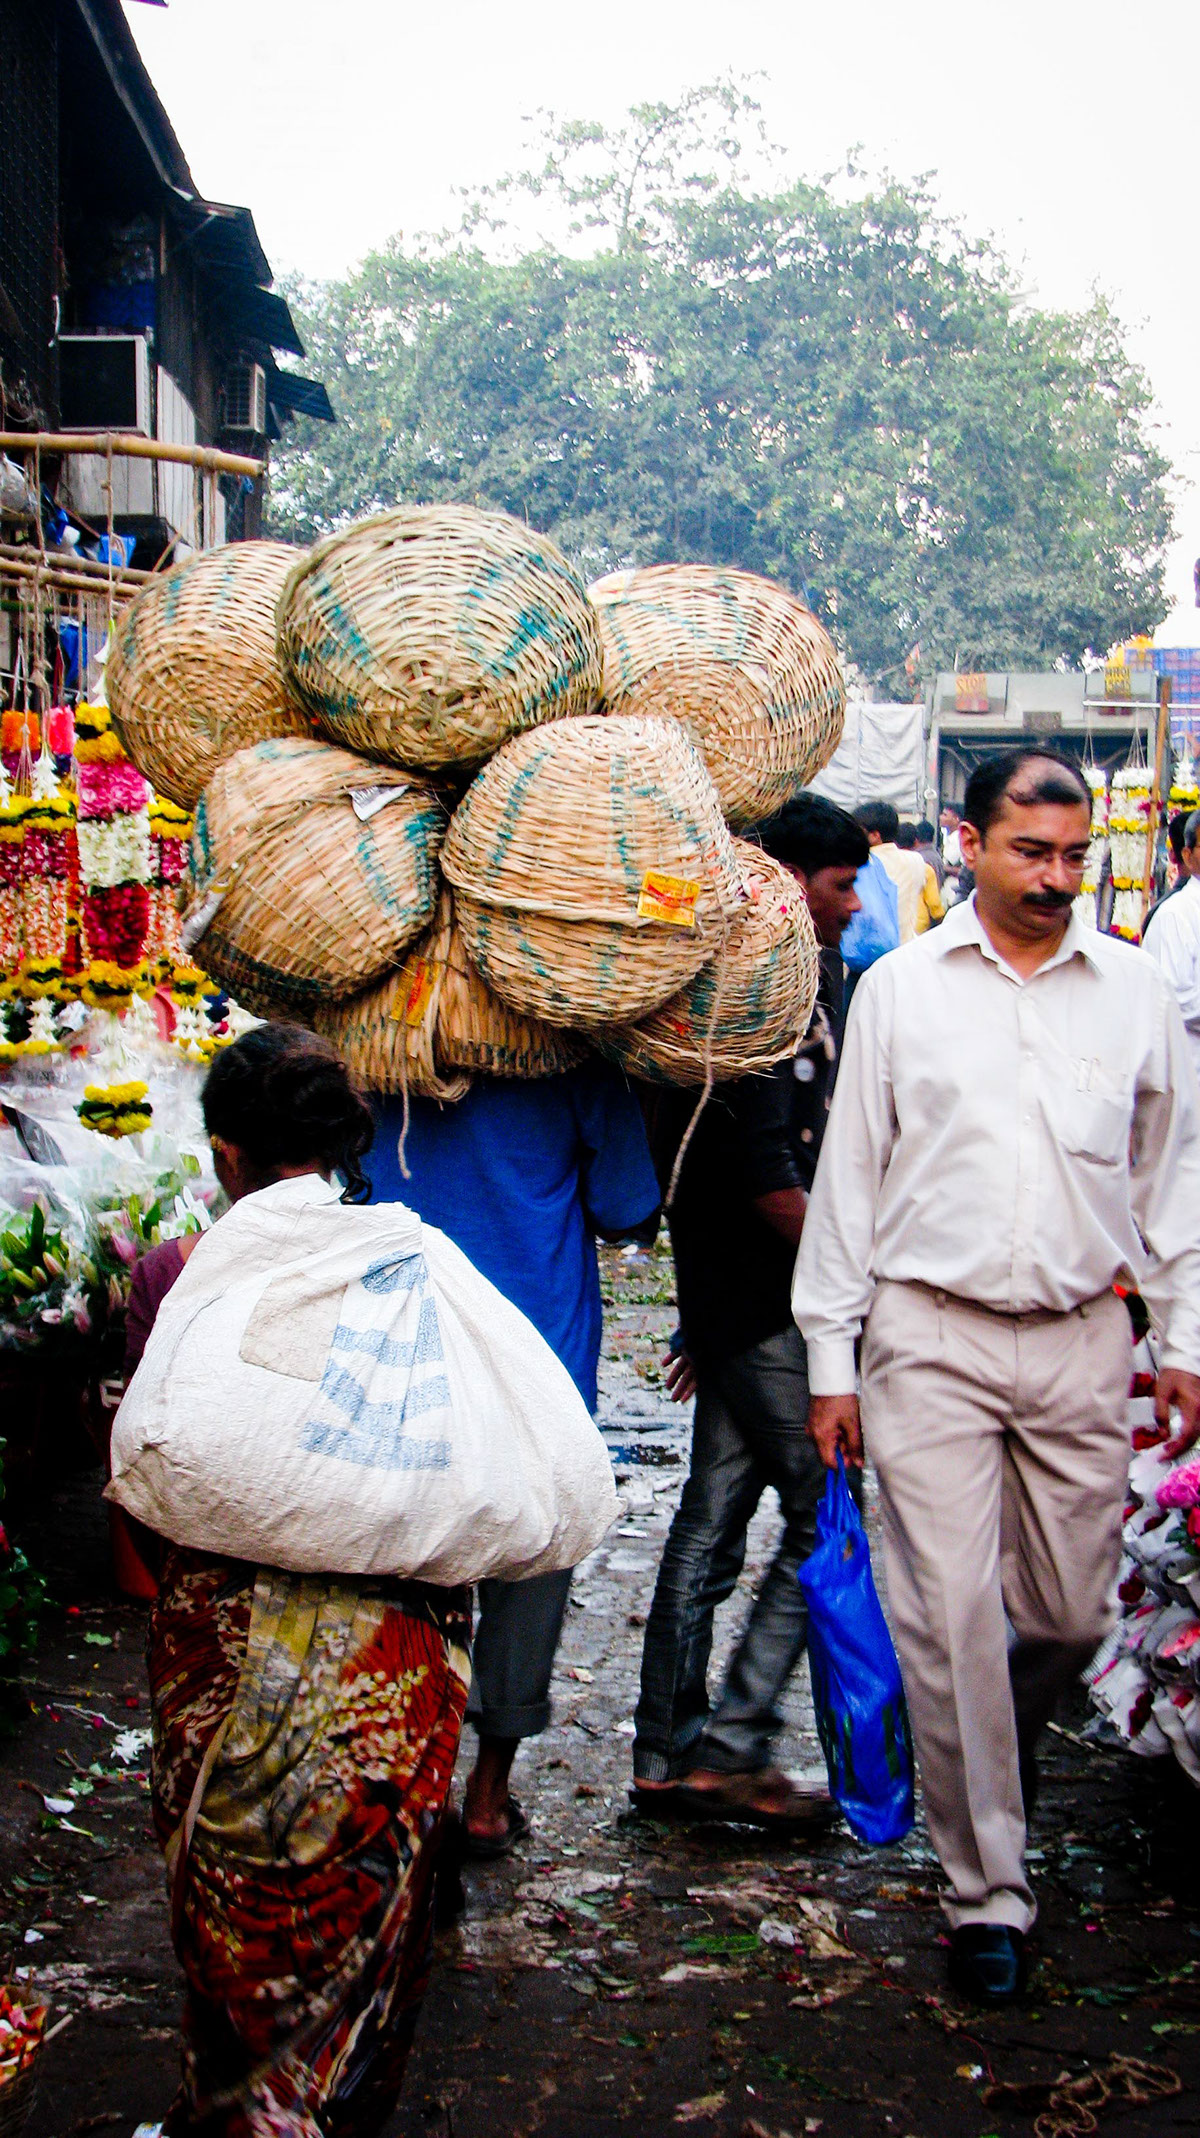 Flowers  flower market  mumbai  Street Photography dadar  India  daily life busy